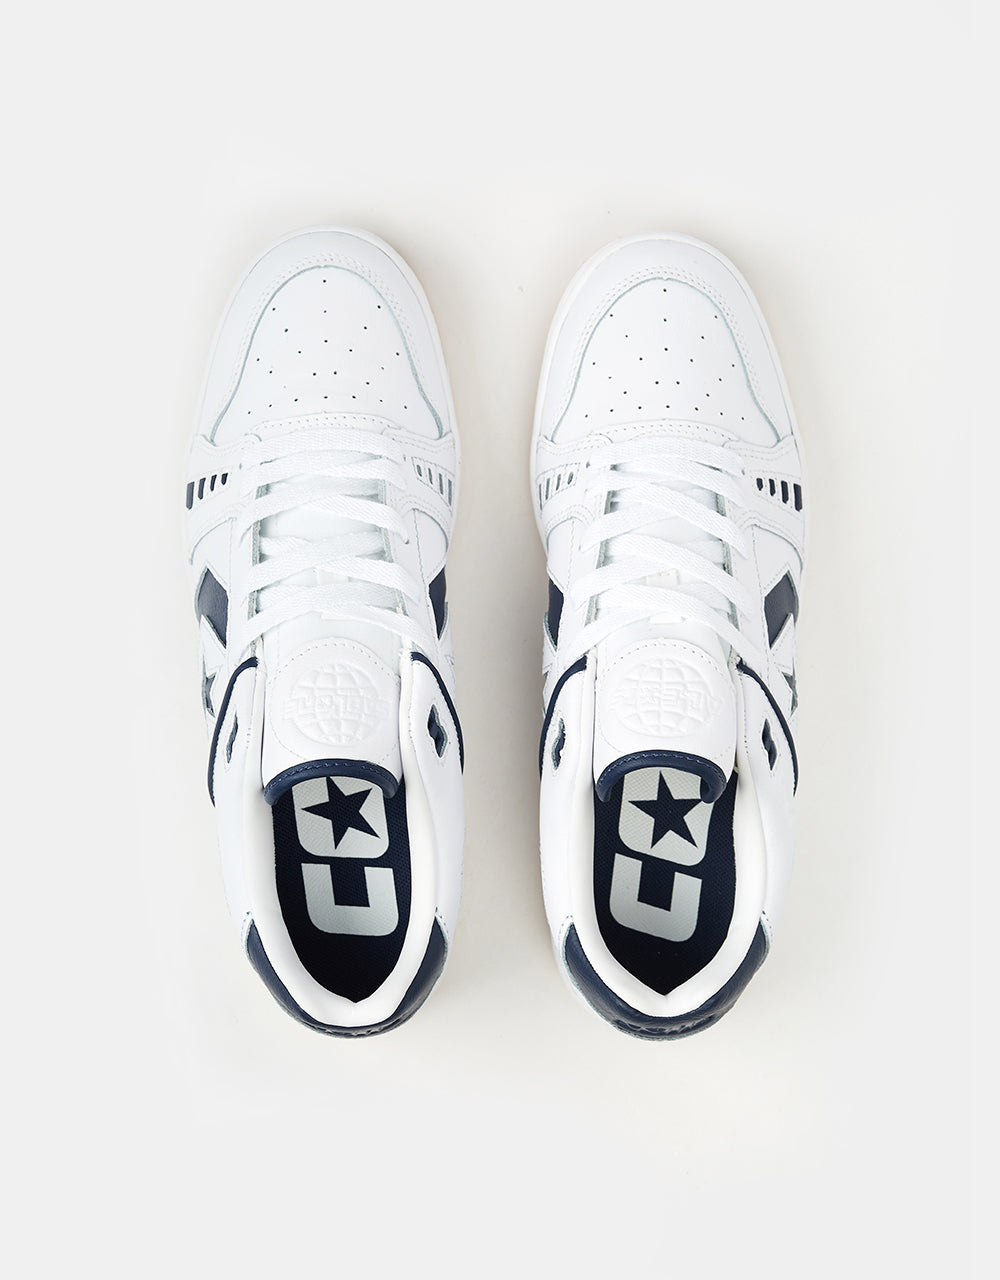 Converse AS-1 Skate Shoes - White/Navy/Gum